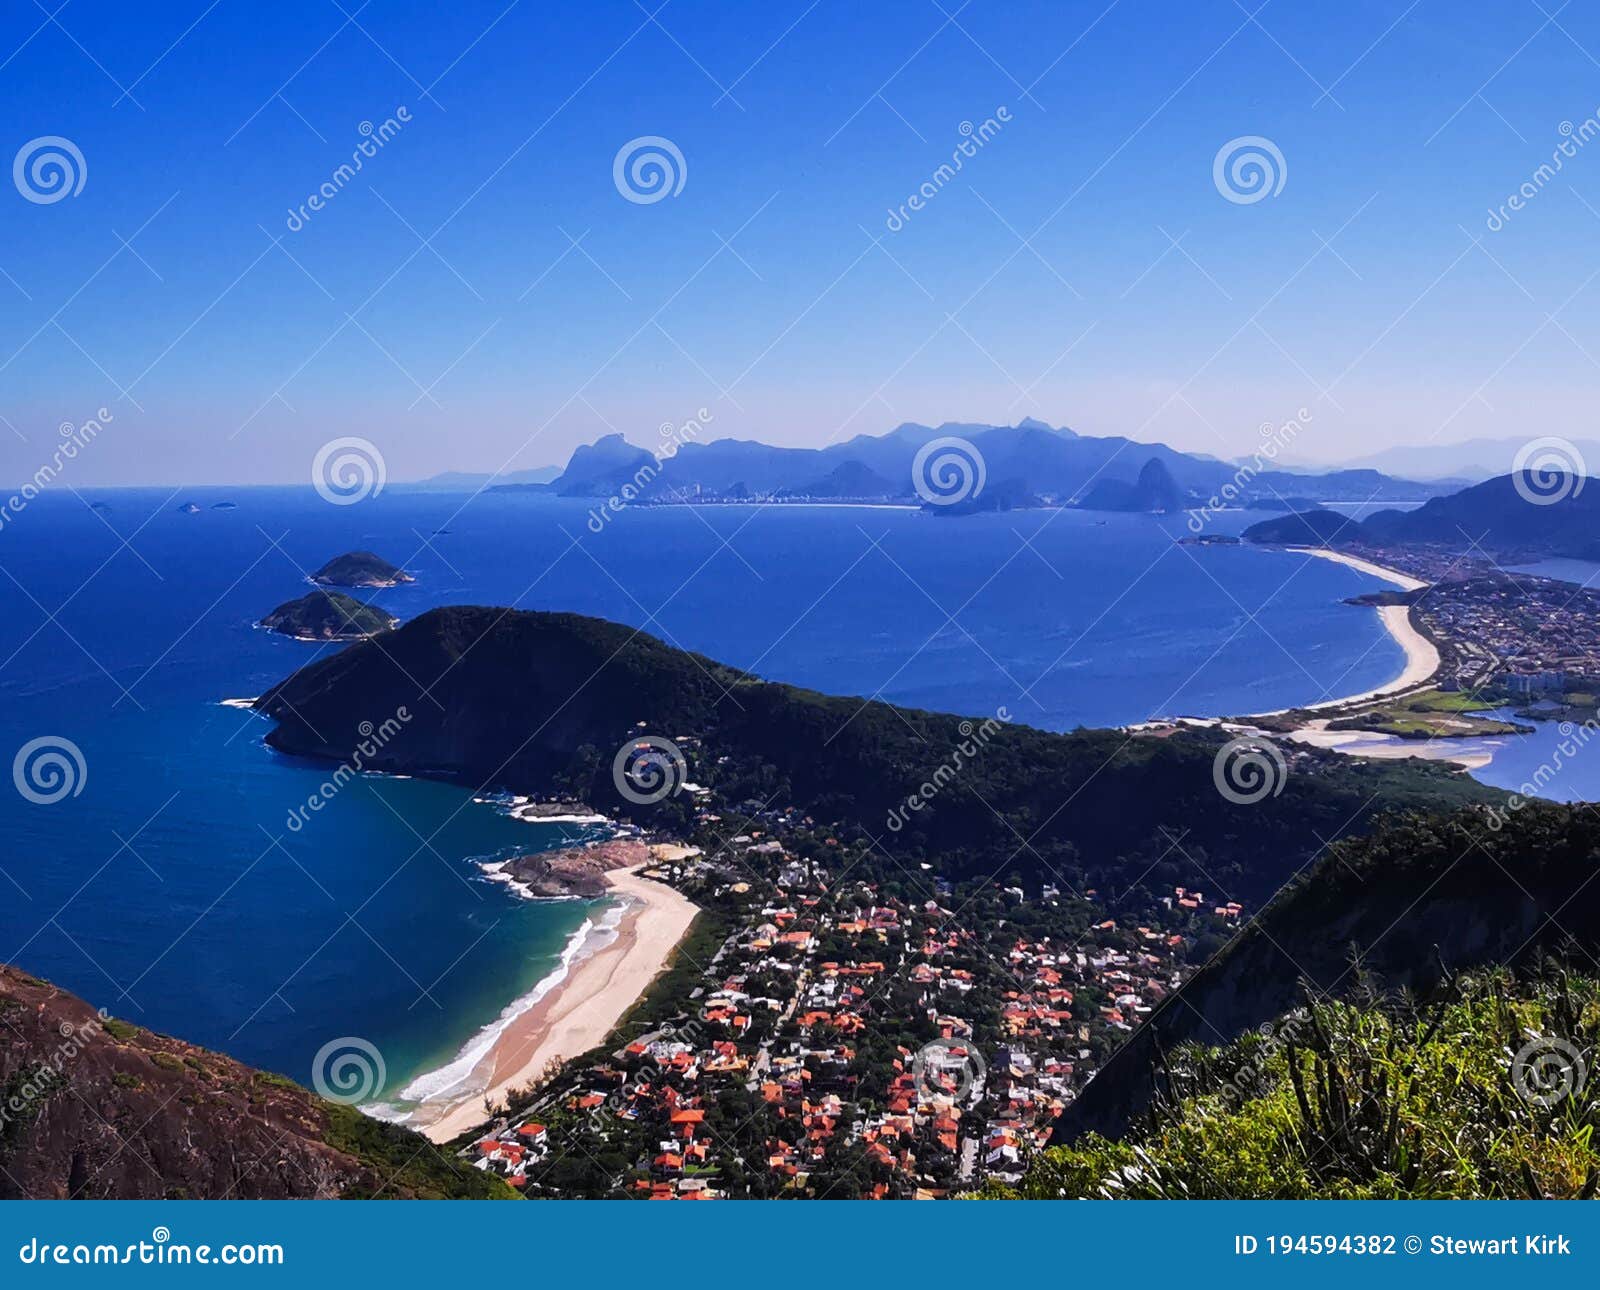 itaipu coastline , rio, brazil